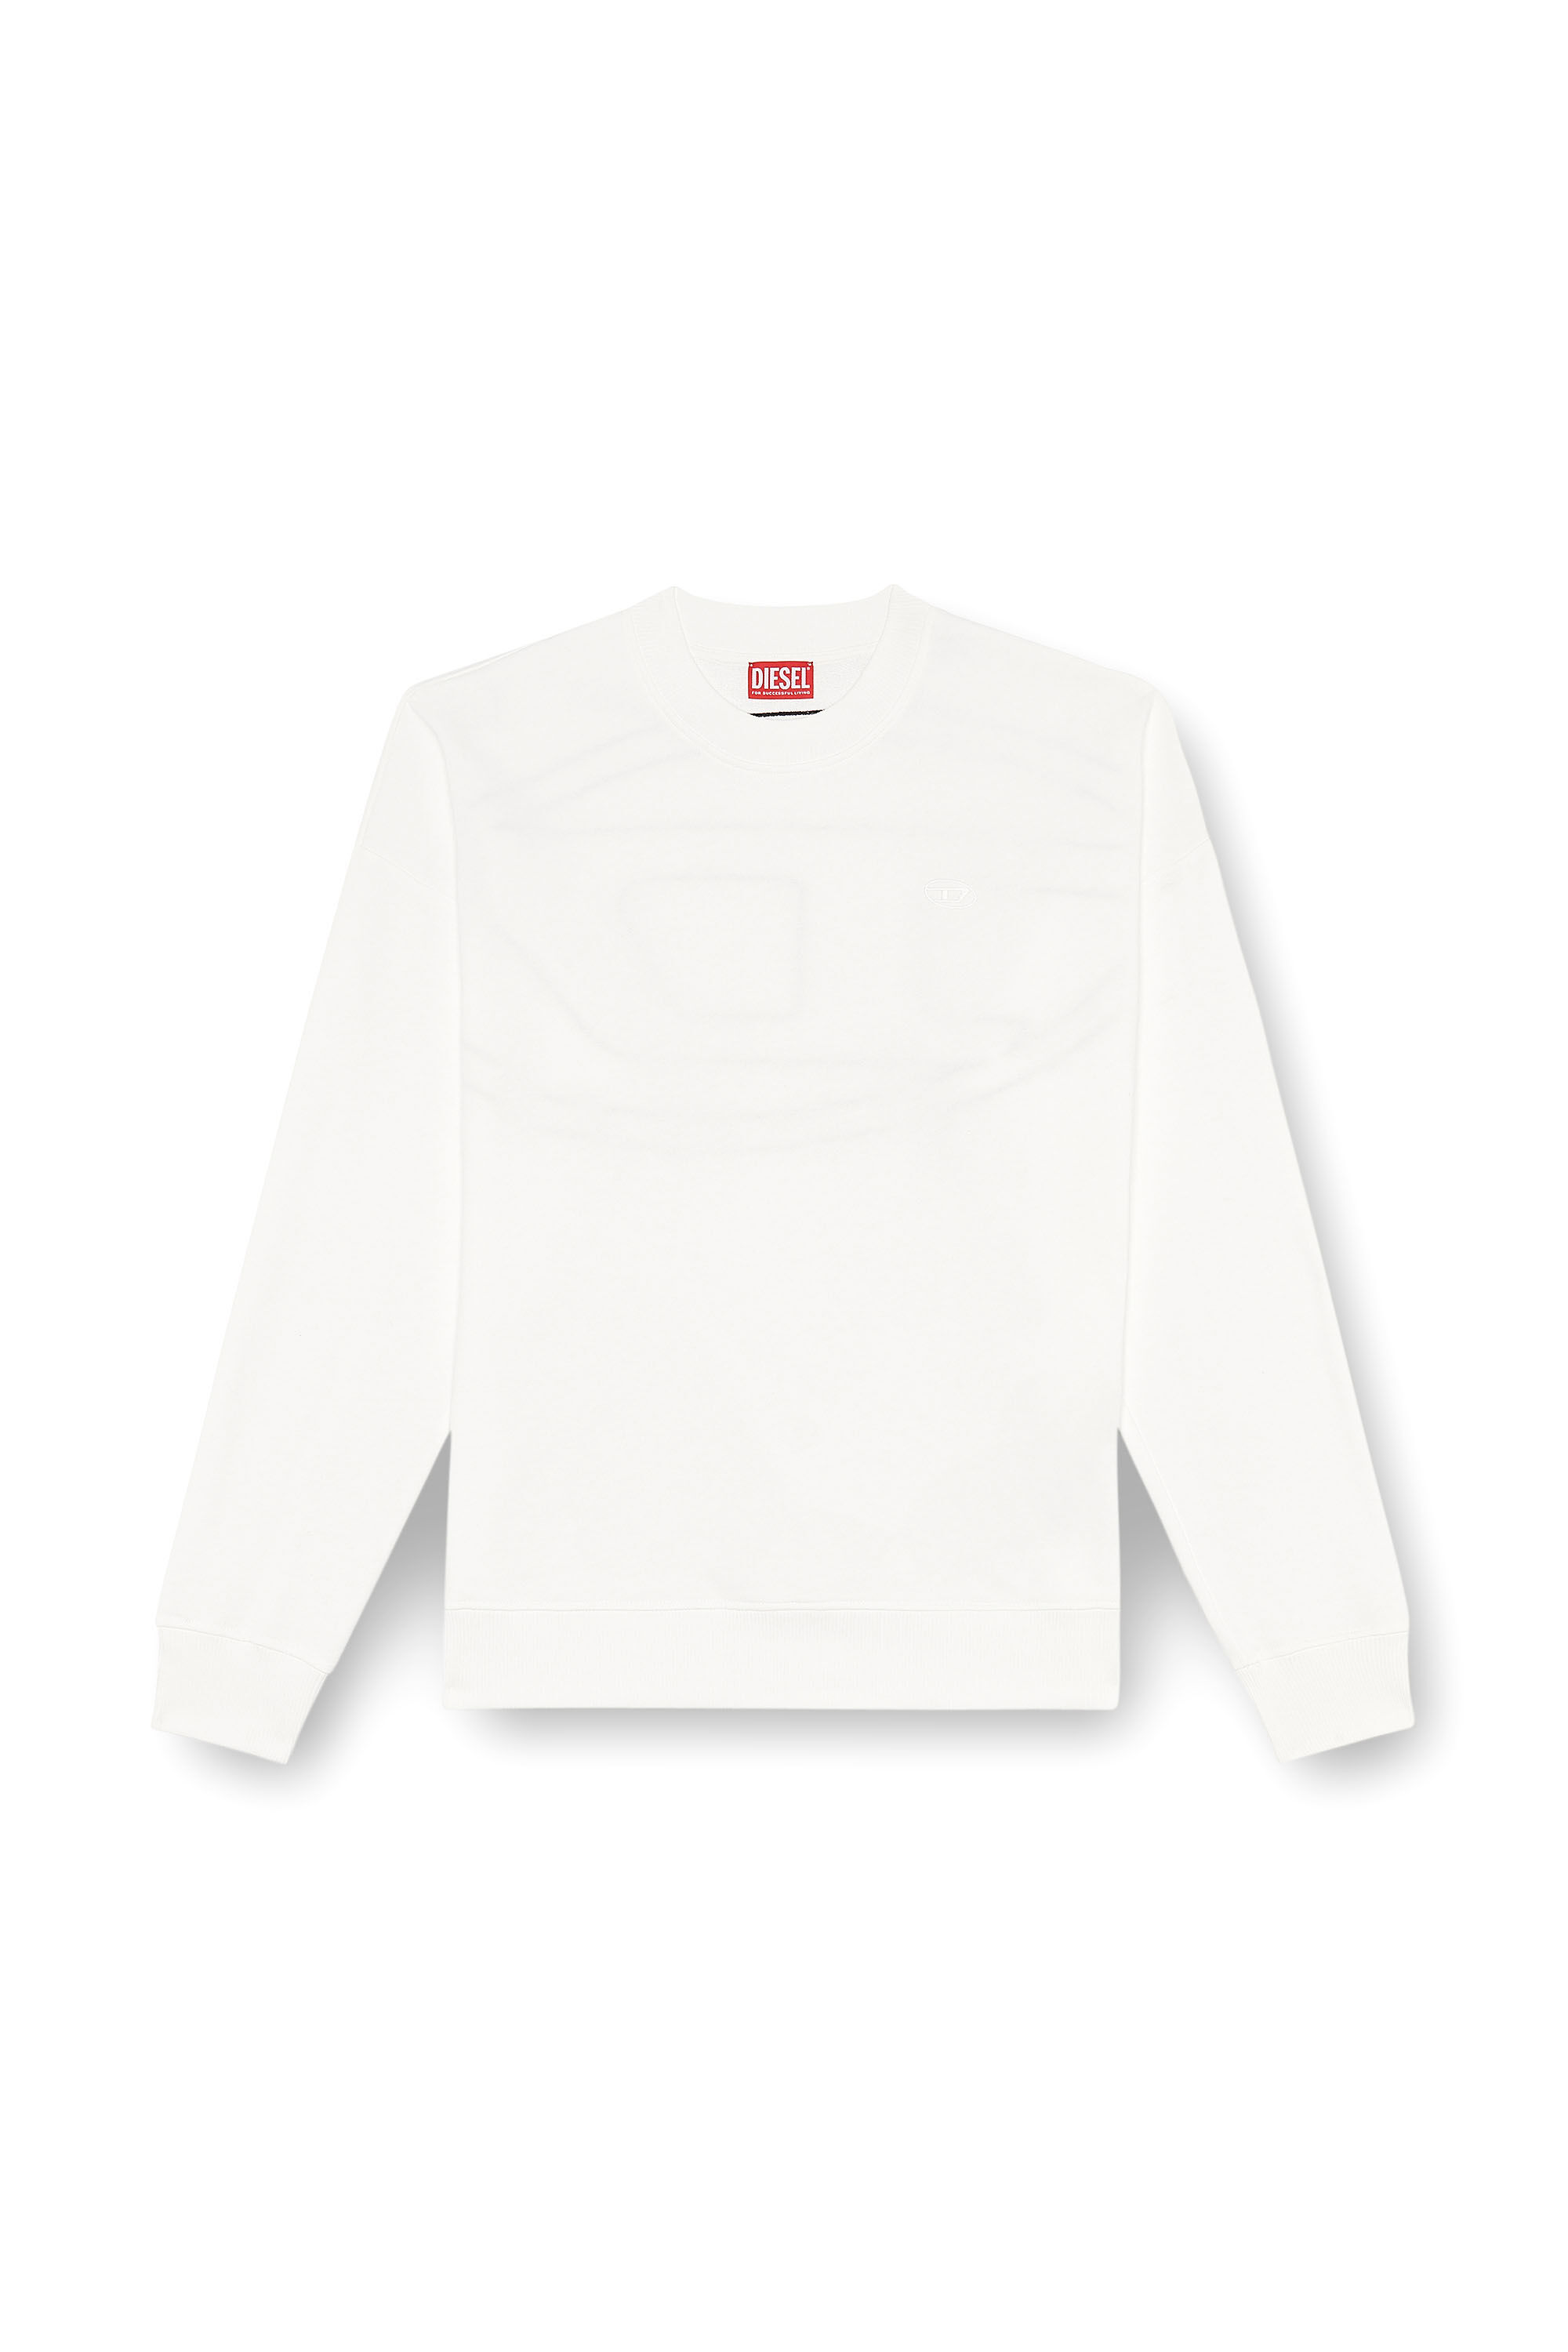 Diesel - S-ROB-MEGOVAL-D, Homme Sweat-shirt avec logo brodé in Blanc - Image 2